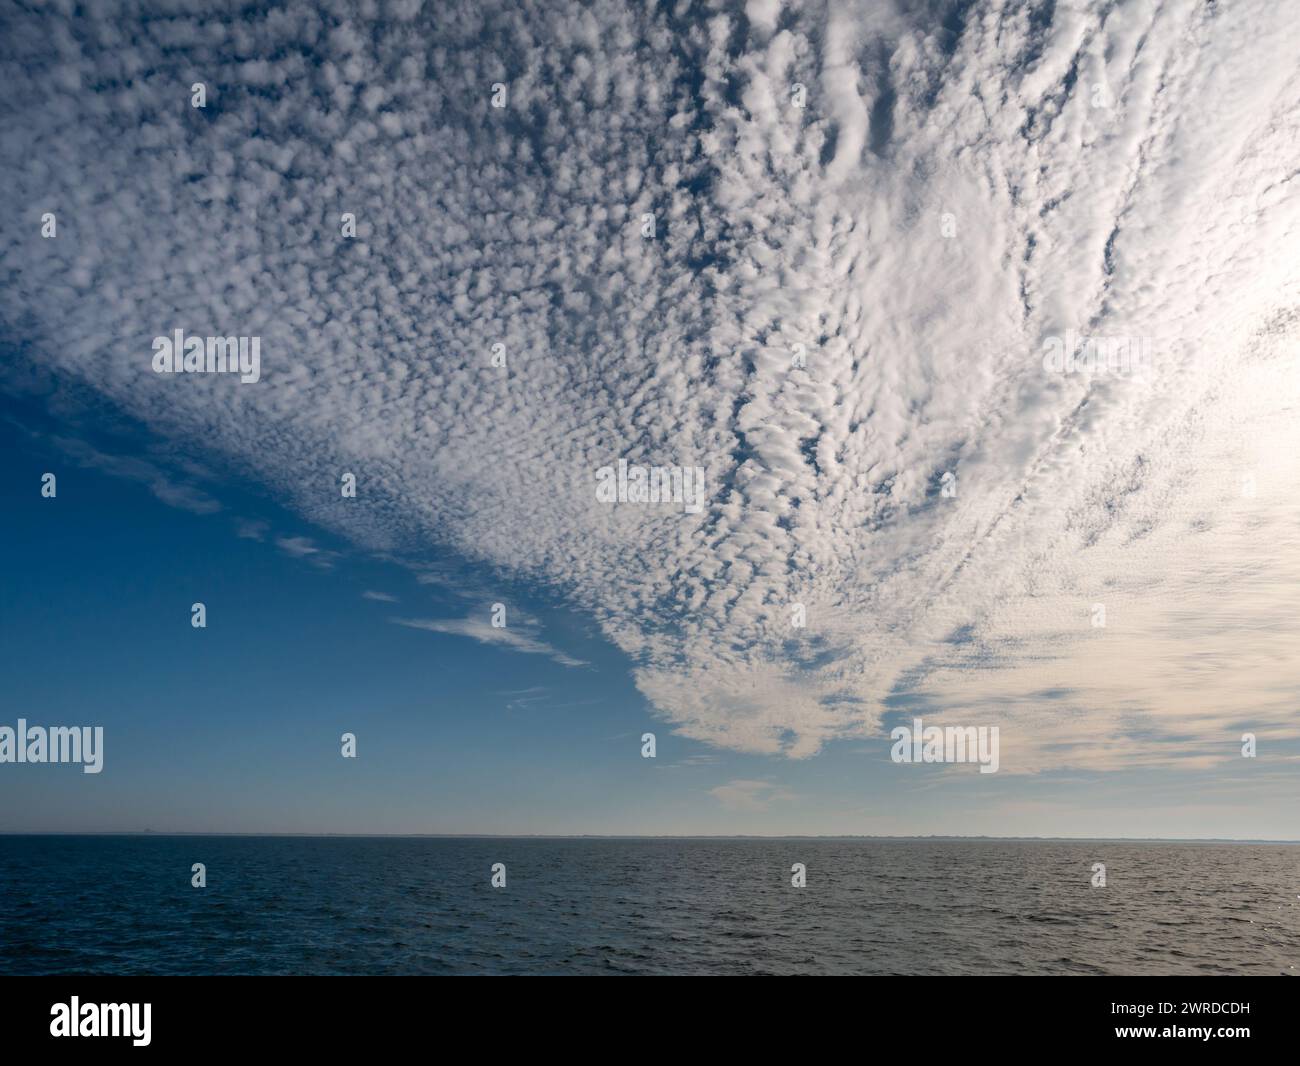 Field or bank of cirrocumulus clouds over German Bight, North Sea near coast of Jutland, Denmark Stock Photo